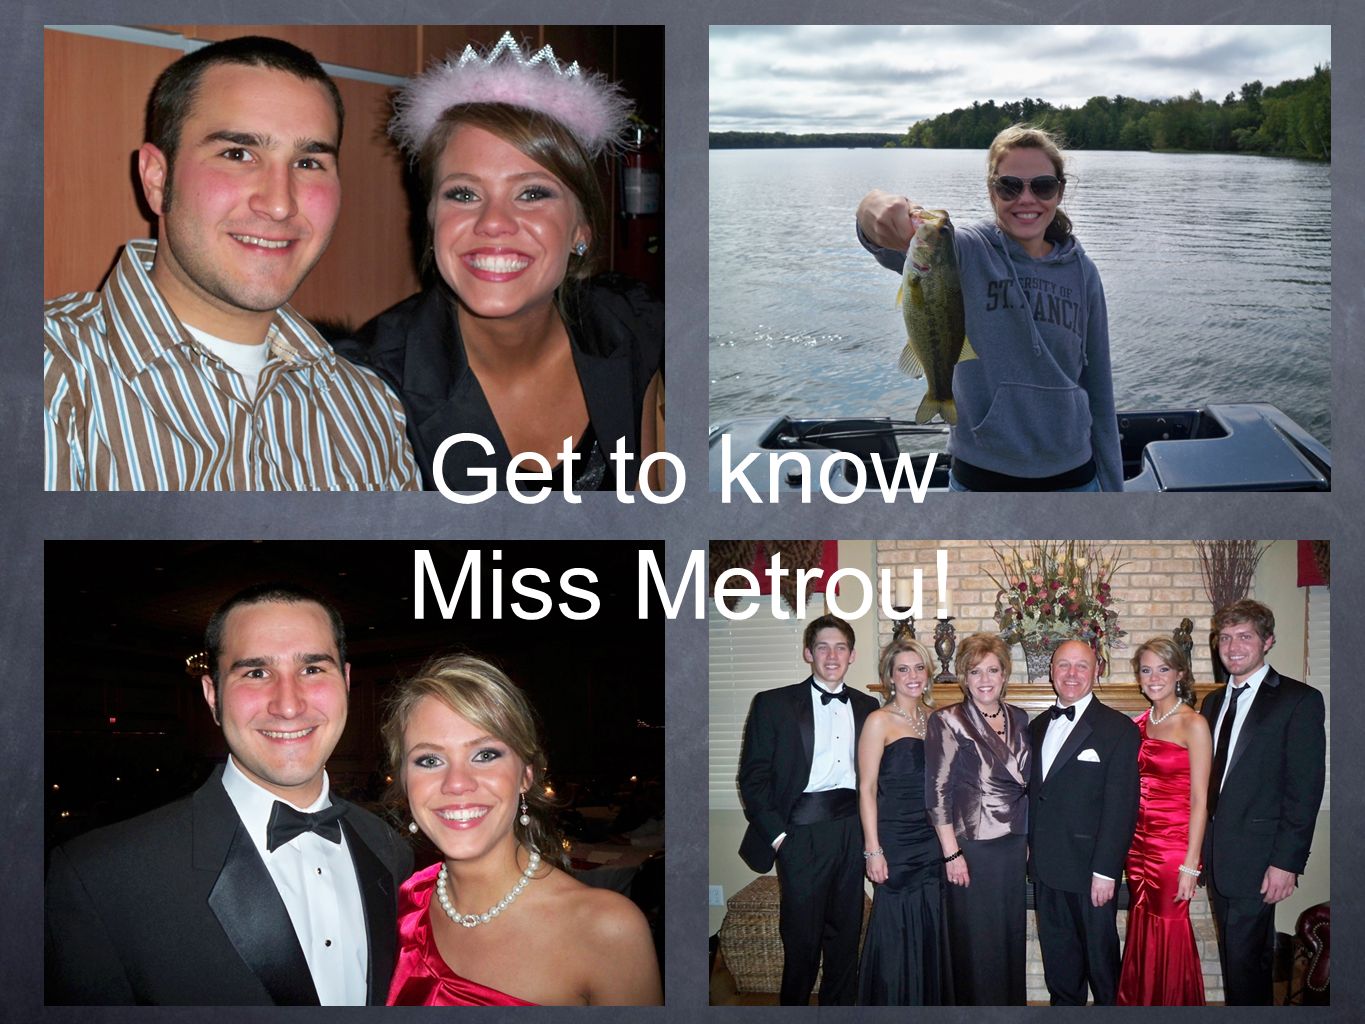 Get to know Miss Metrou!